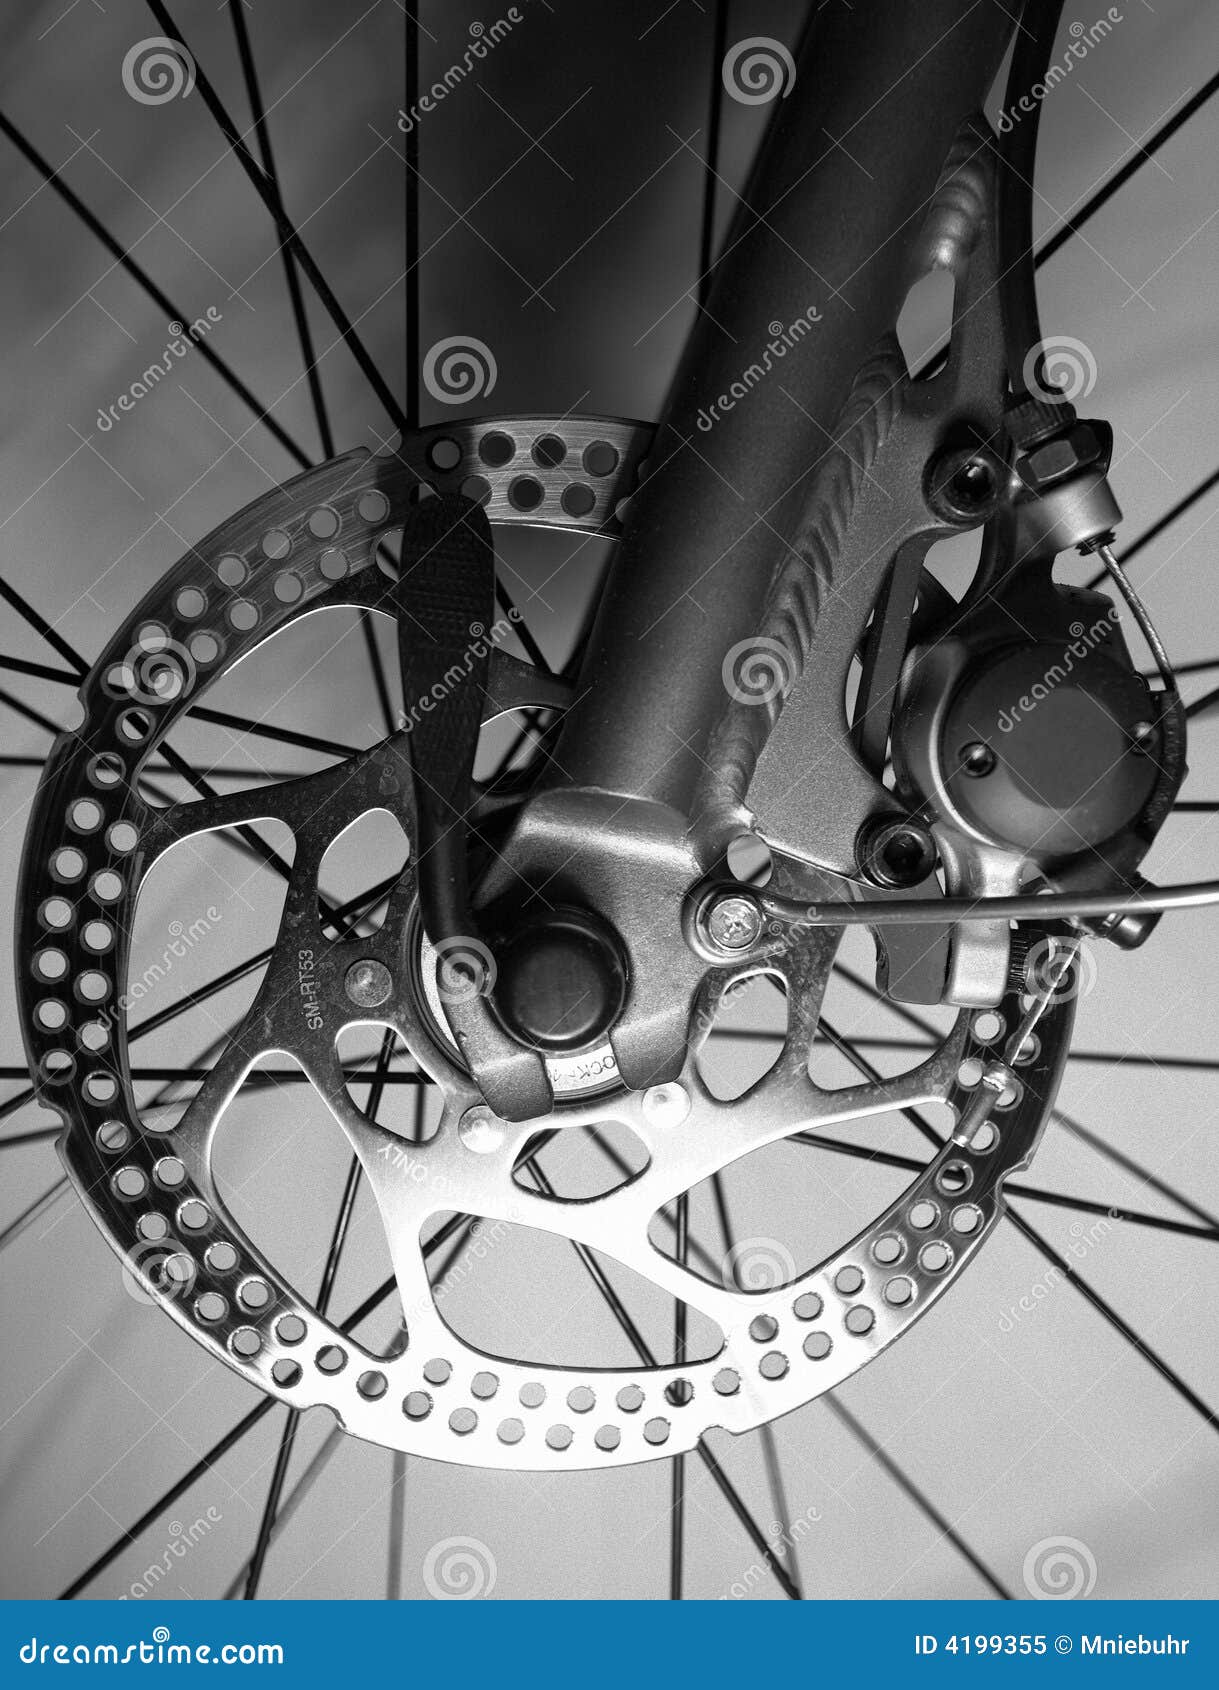 George Hanbury Dependencia salvar Como puedo saber si puedo poner frenos de disco a mi bici? | ForoMTB.com